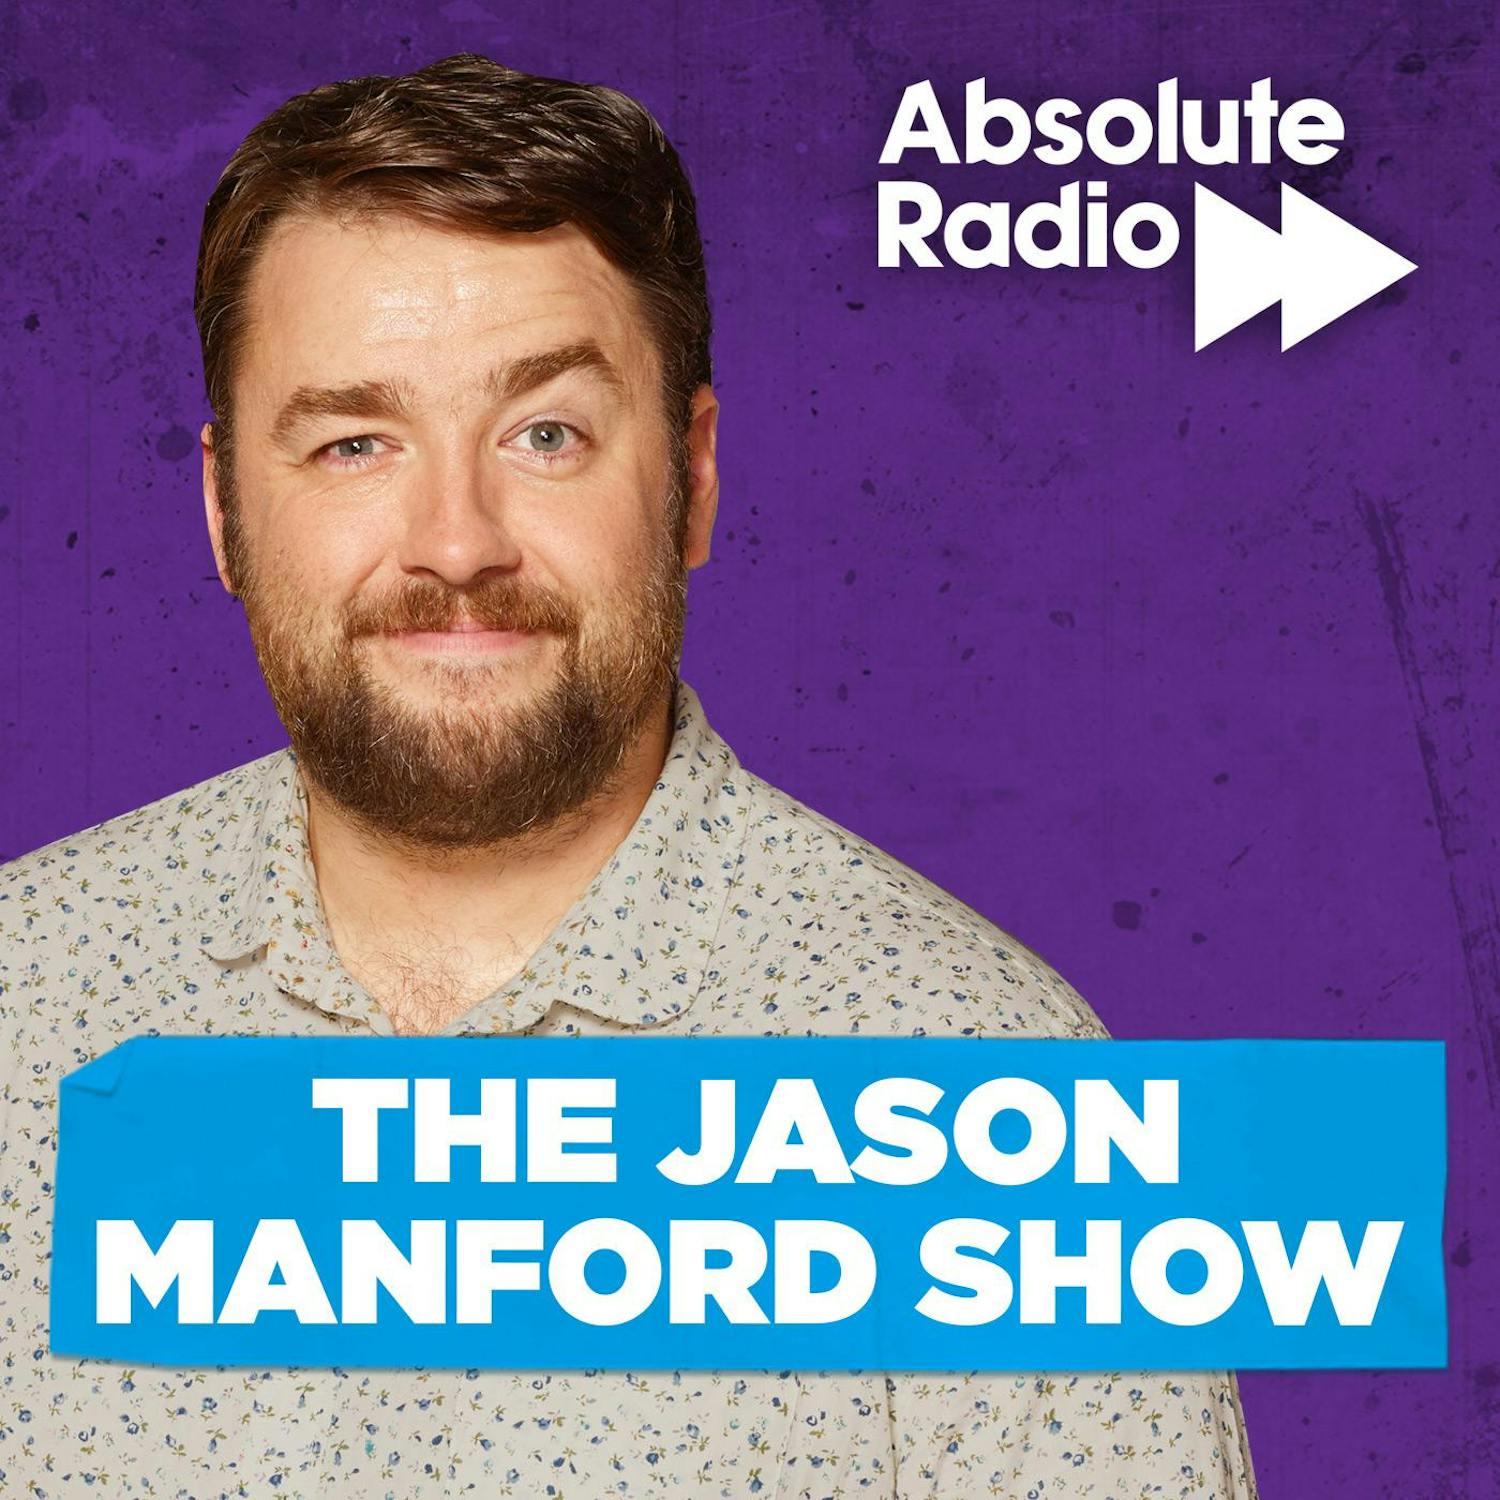 The Jason Manford Show - With Alex Horne